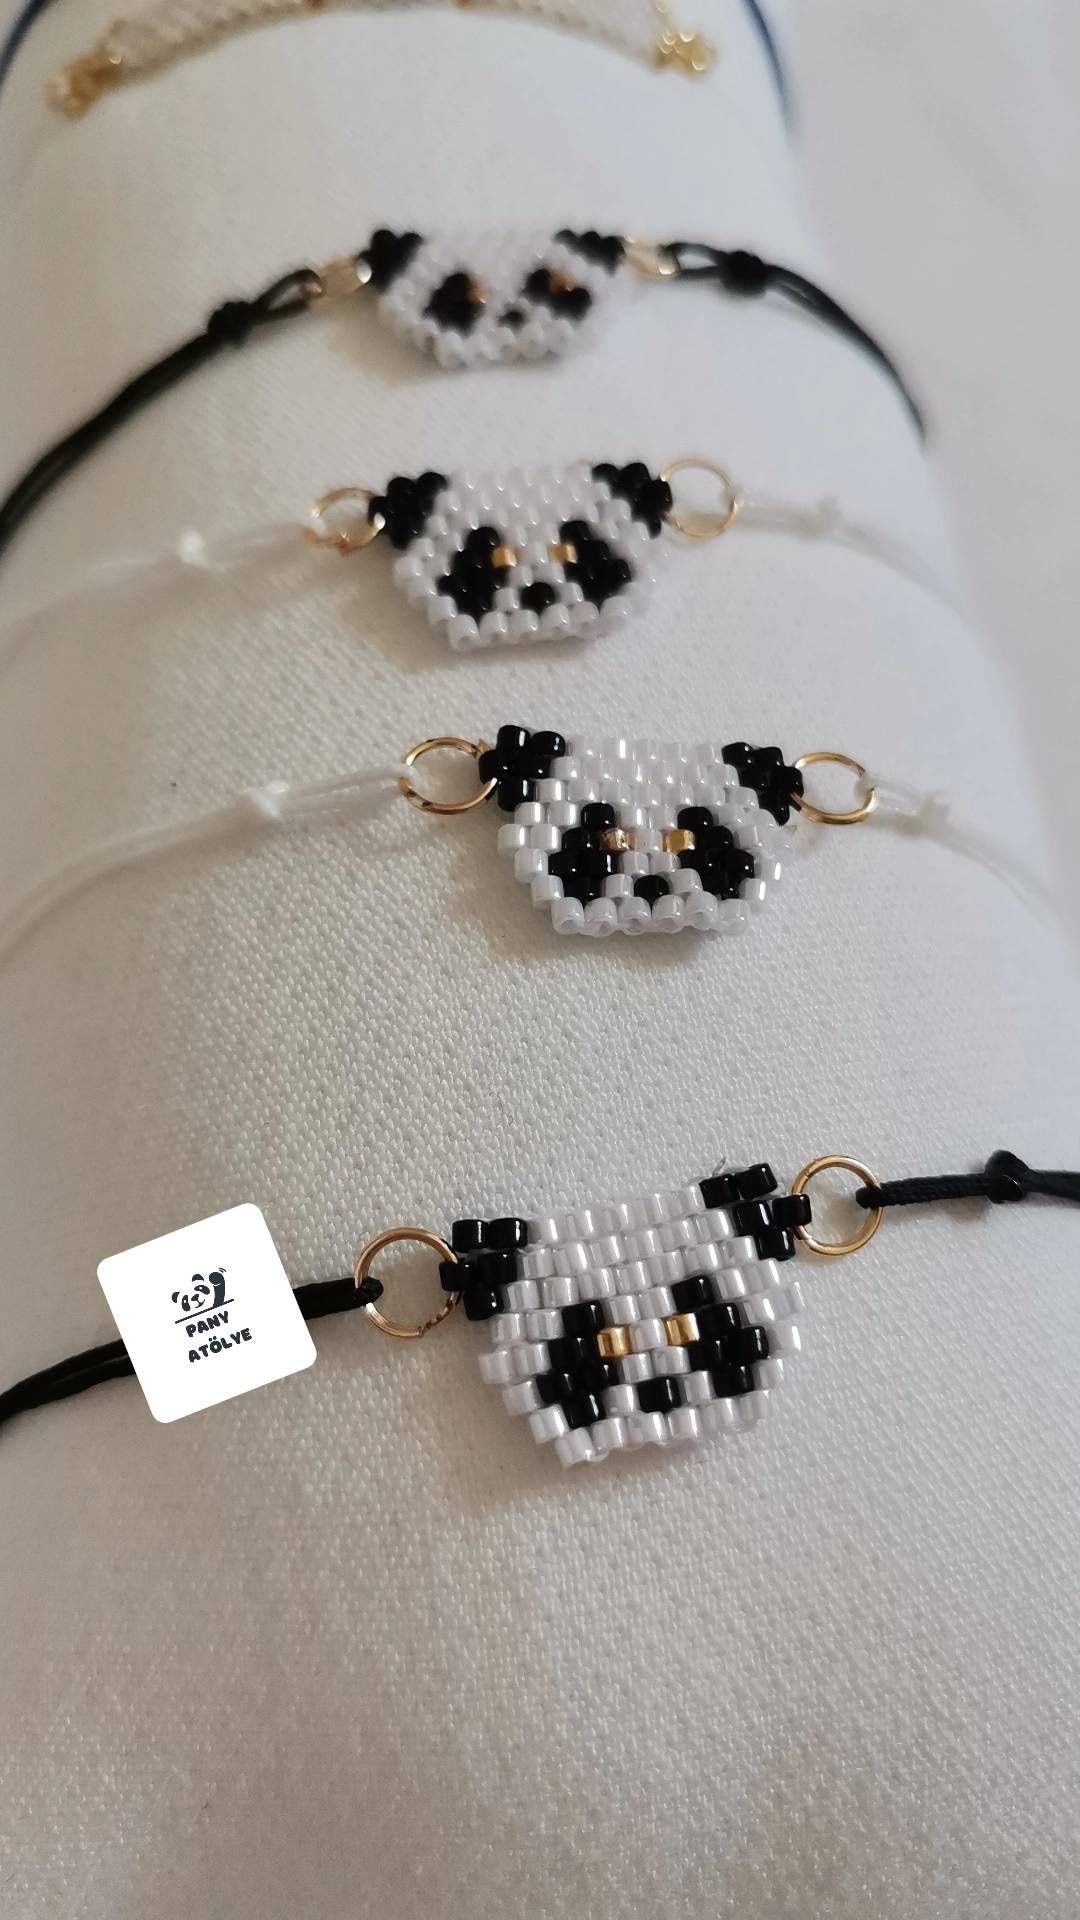 Panda Bracelet, Black and White Yin Yang Bracelet, Hand Woven Loom  Wristband, Seed Bead Jewelry for Women Men, Totem Animal Friendship Gift -  Etsy